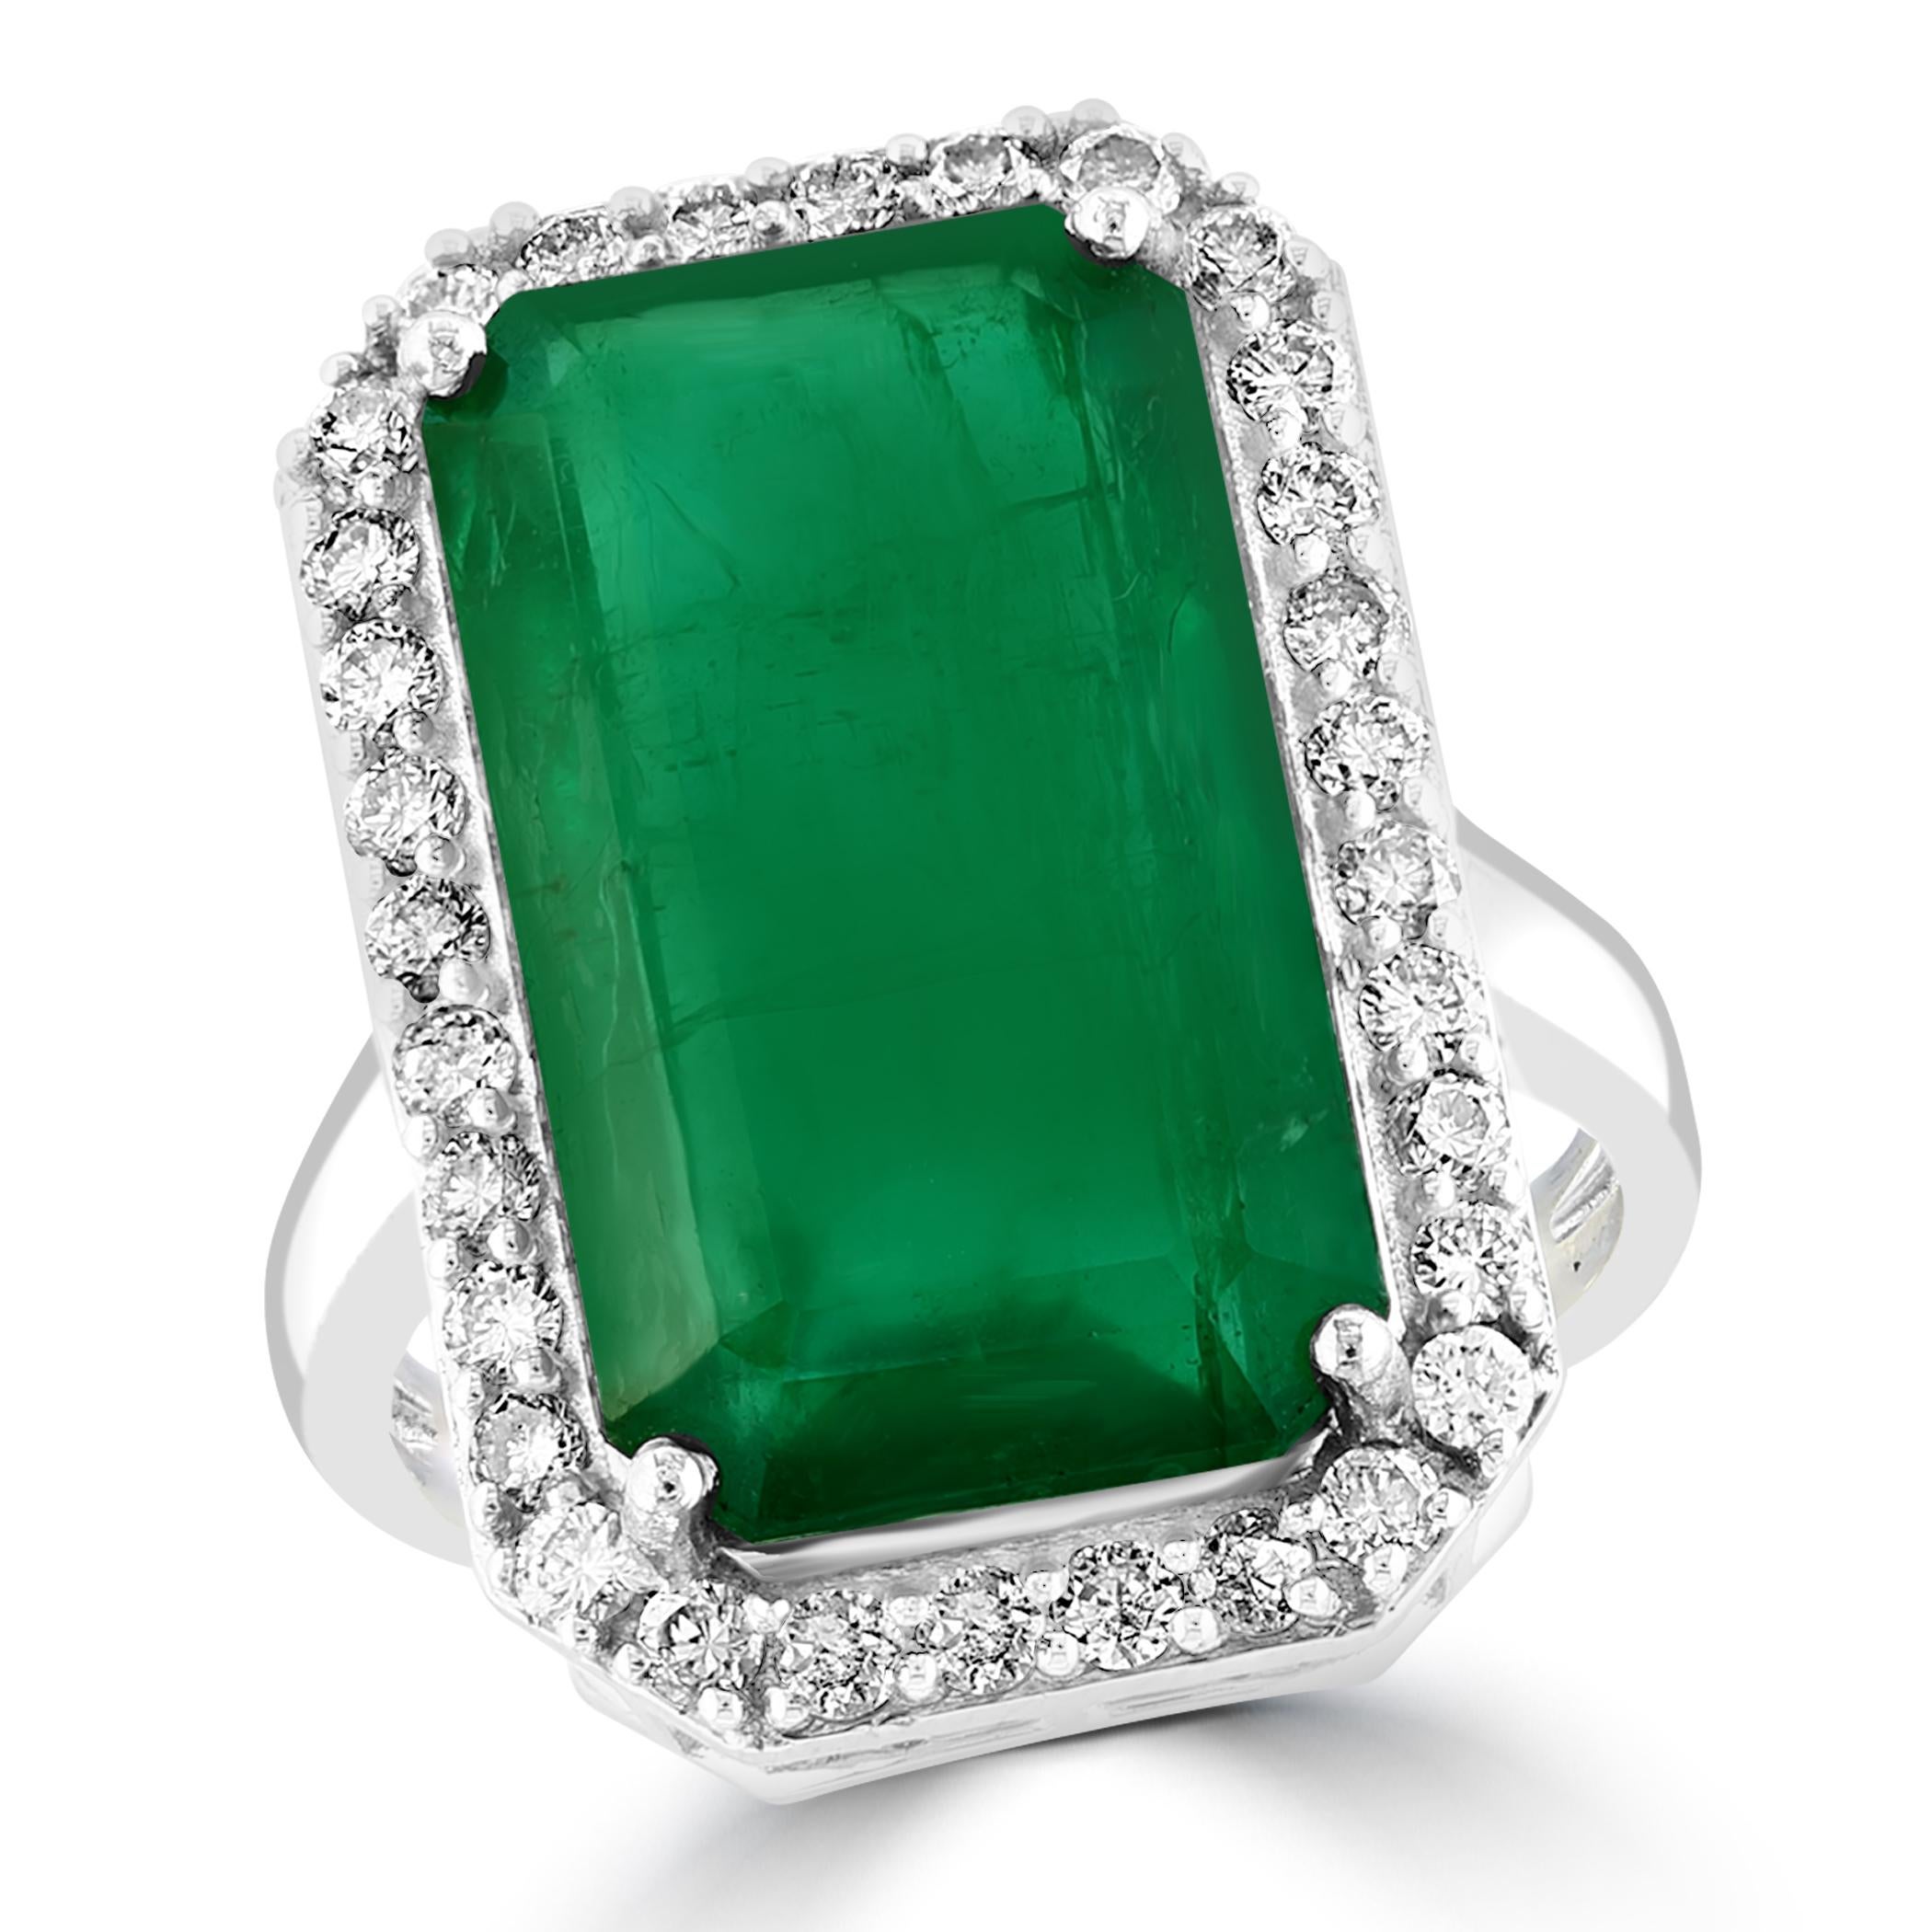 Natural 16 Carat Emerald Cut Zambian Emerald & Diamond Ring in 14kt White Gold For Sale 4